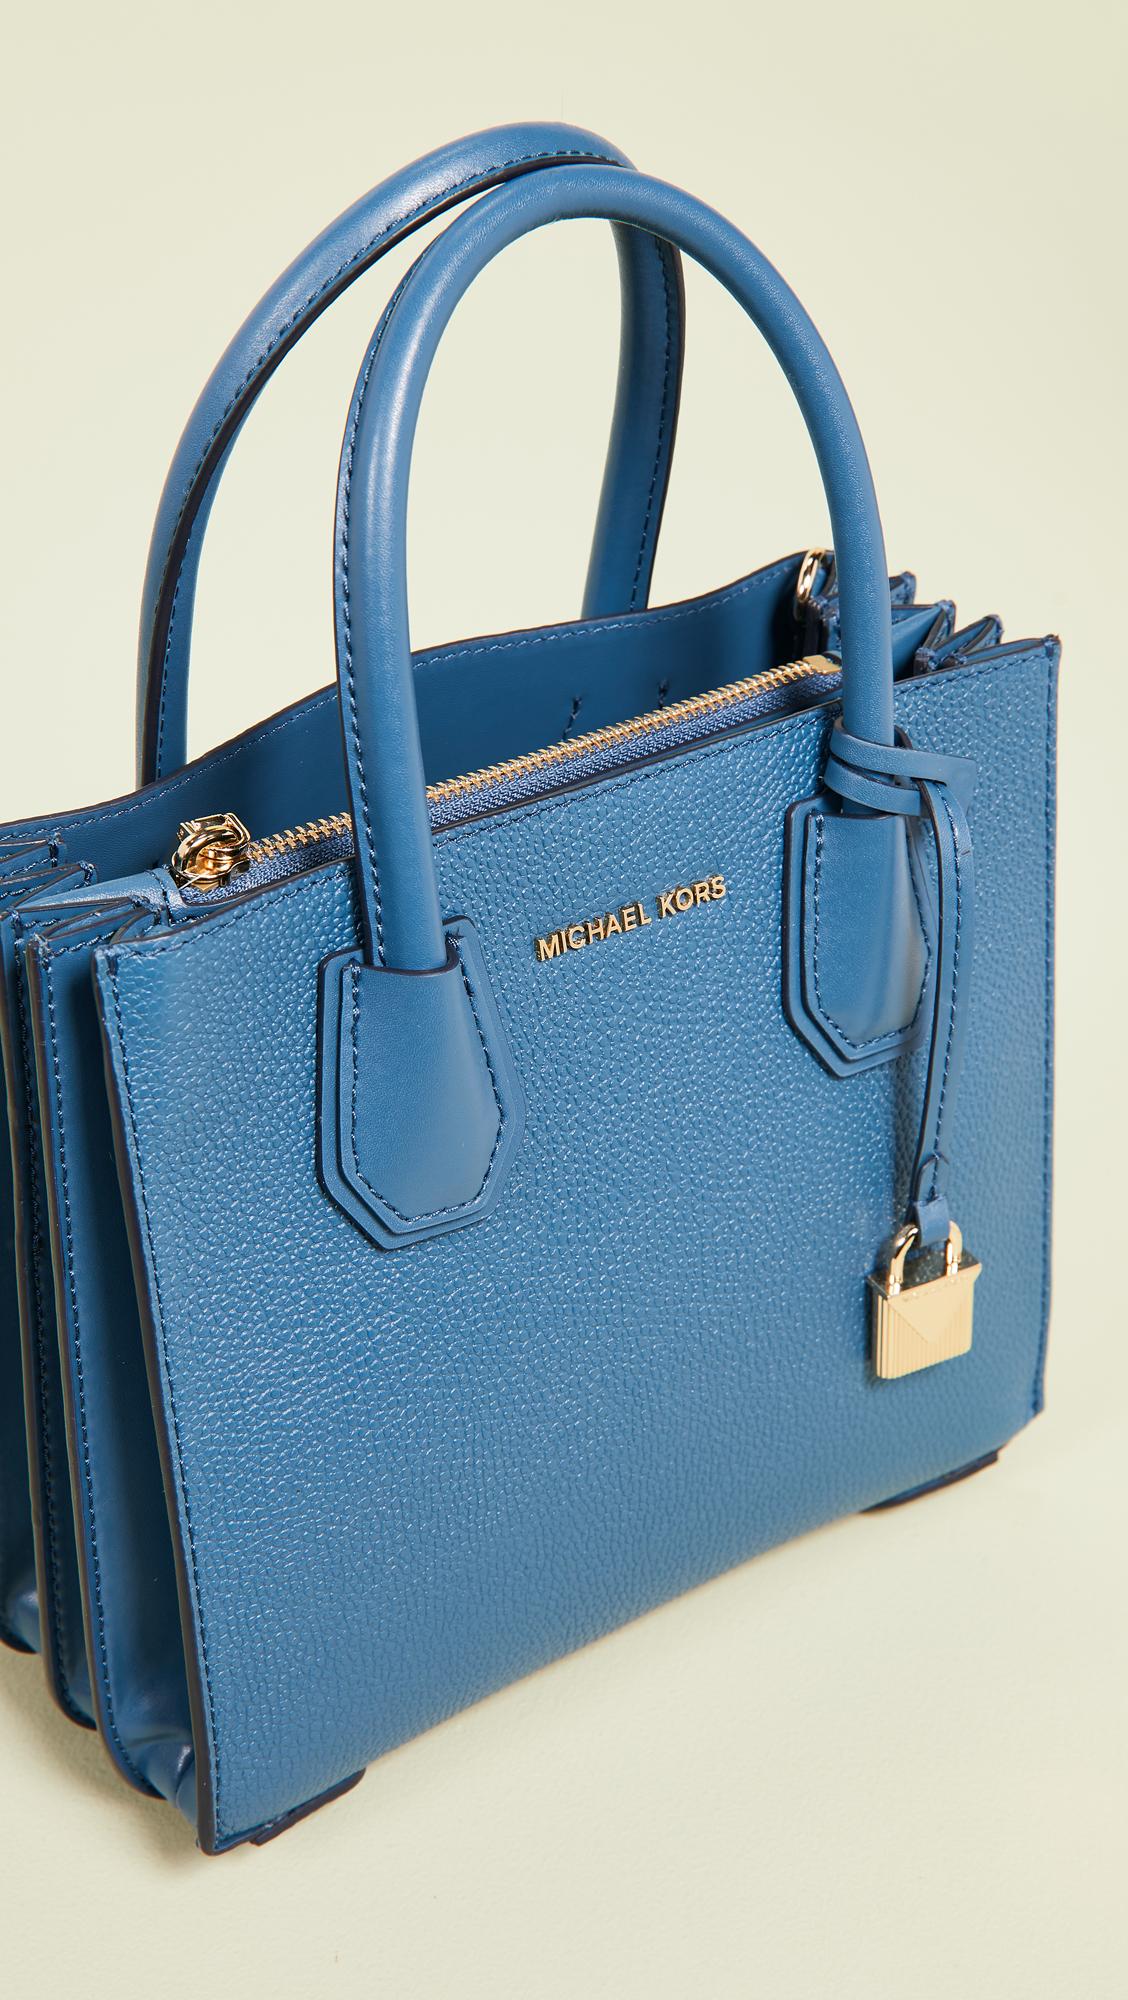 MICHAEL KORS #40188 Mercer Medium Blue Leather Duffle Bag with